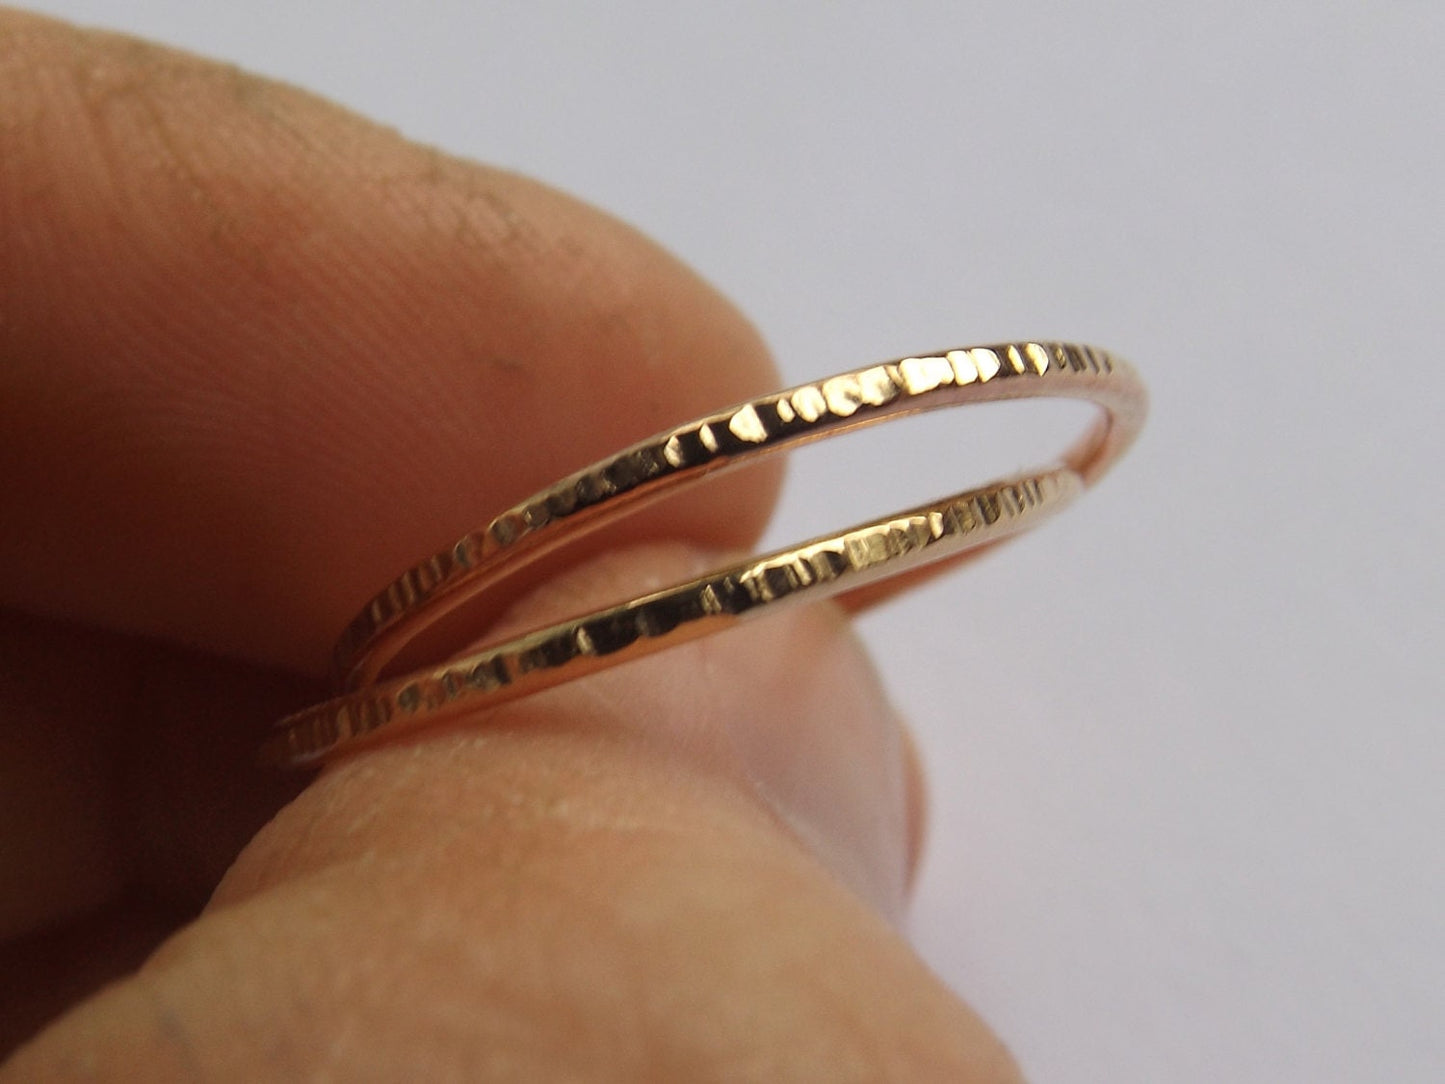 Gold Interlocking Thumb Rings,Thumb Rings,Gold Thumb Ring,Textured Rings,Rolling Ring,Stacking Rings, Minimalist Rings, Unique Rings, Rings